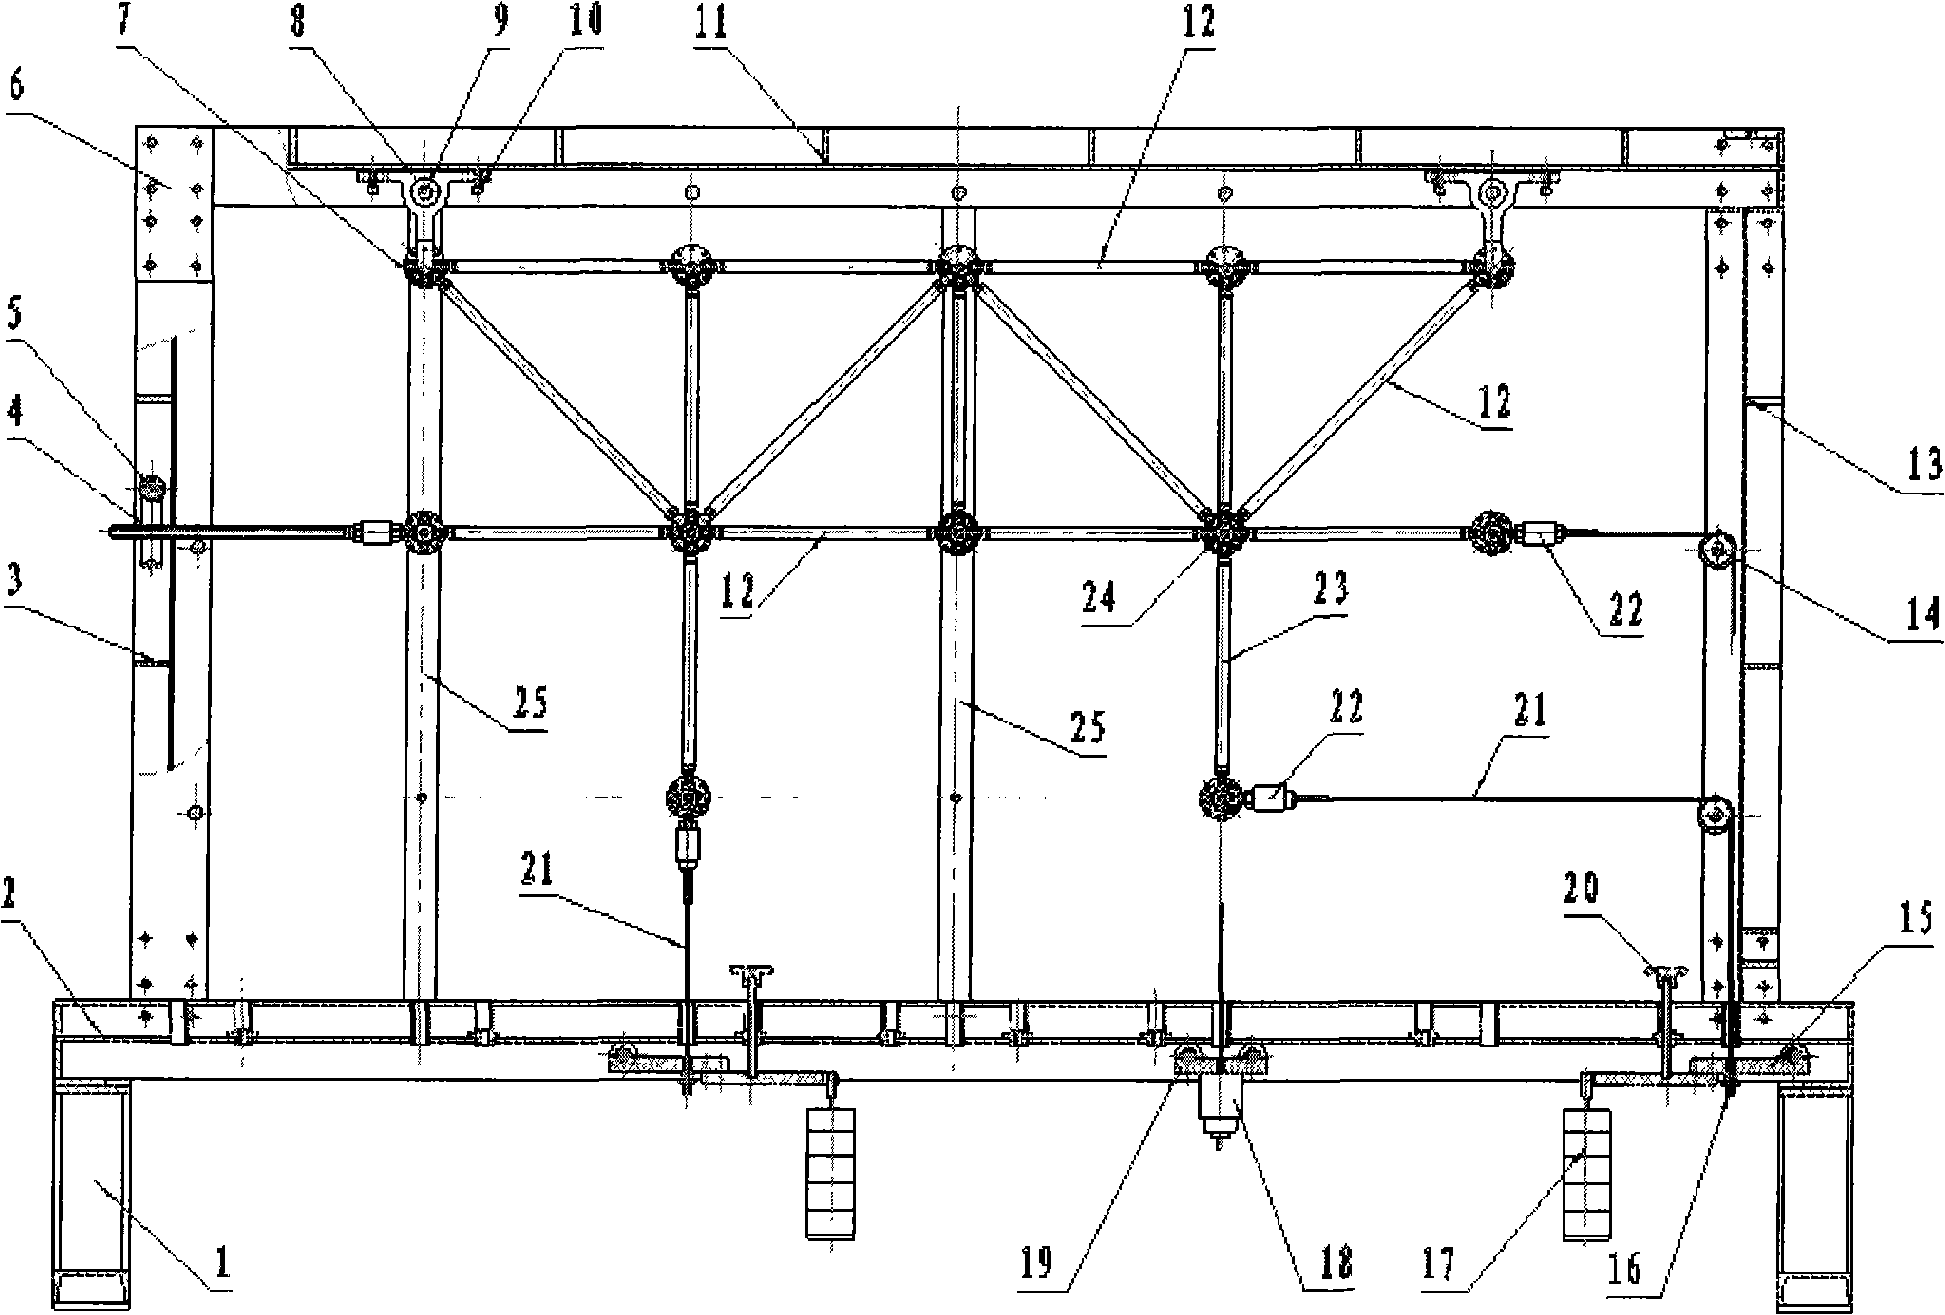 Structure mechanics combined experimental device